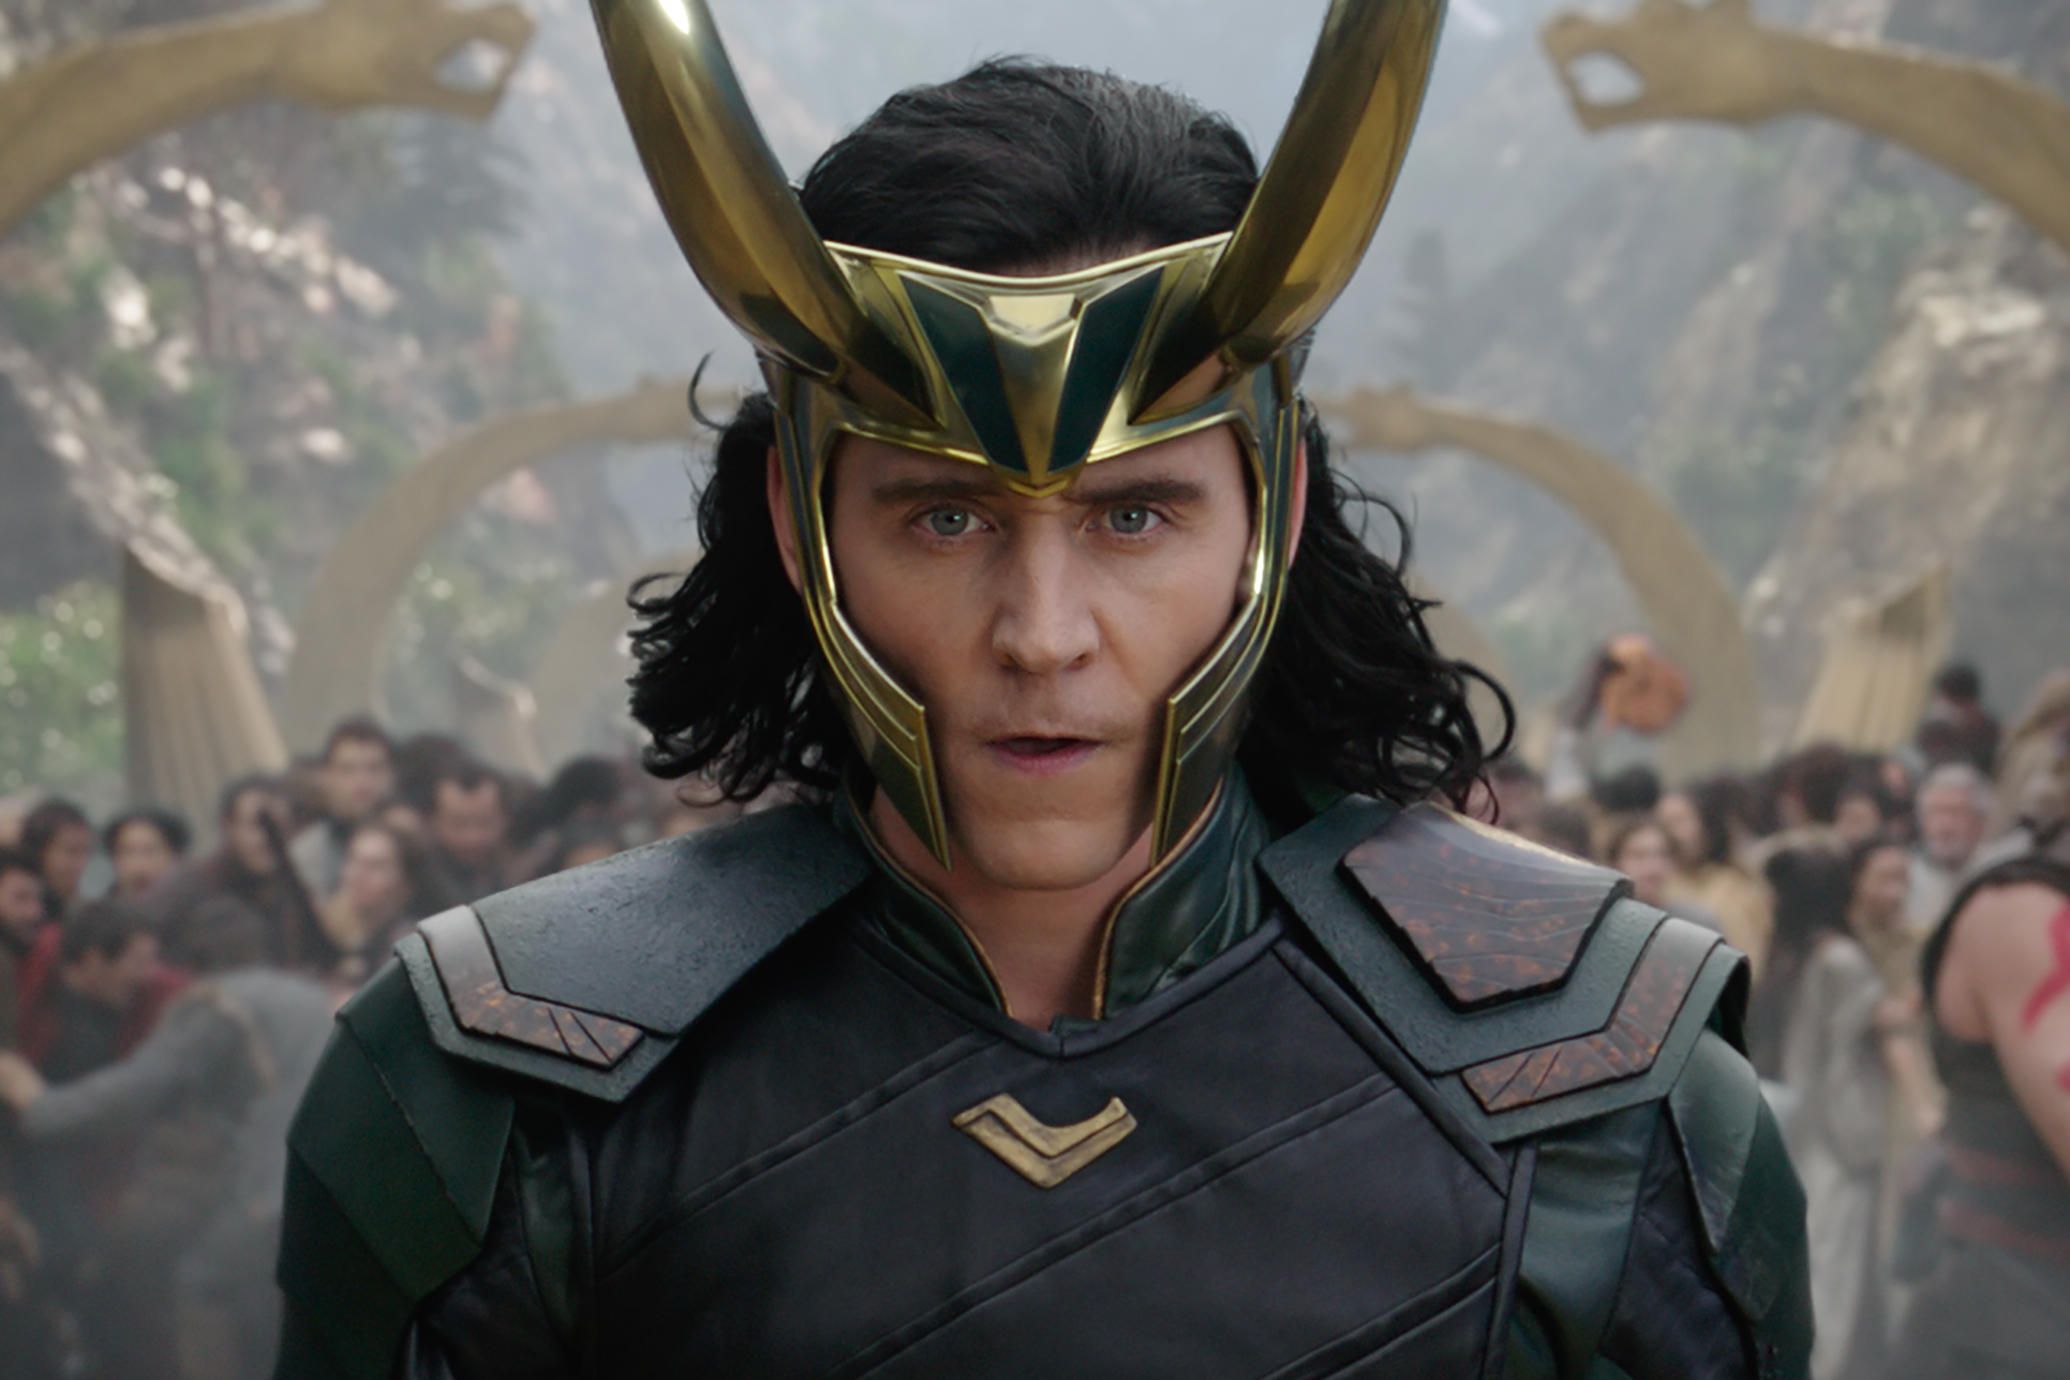 Marvel Studios' THOR: RAGNAROK..Loki (Tom Hiddleston)..Ph: Teaser Film Frame..©Marvel Studios 2017